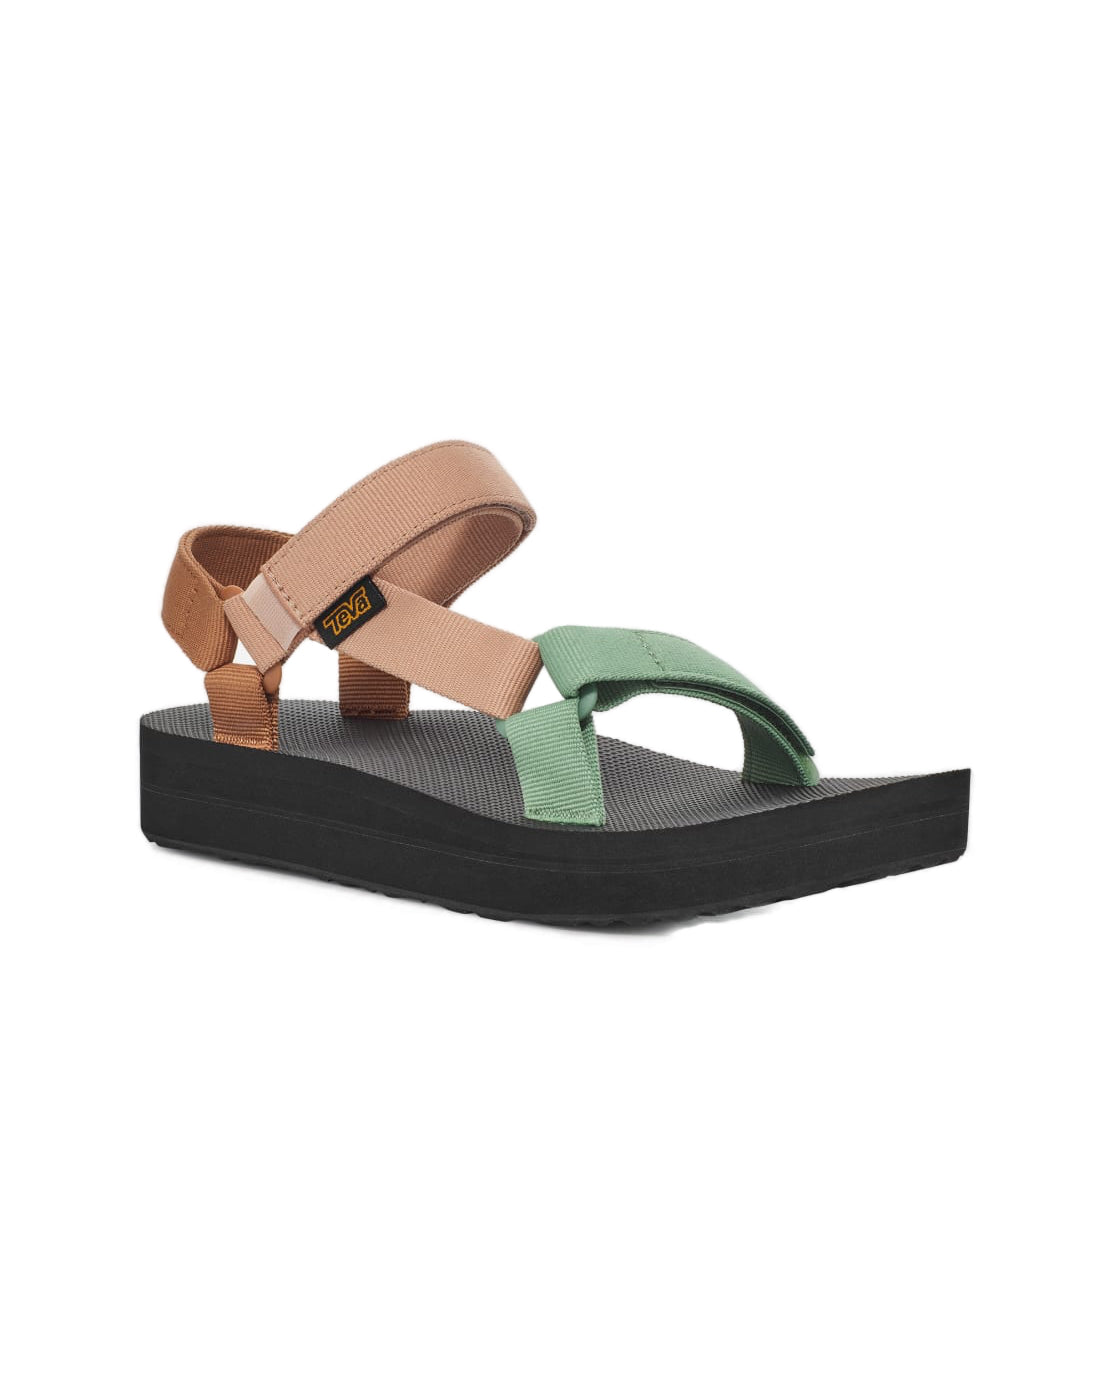 W Midform Universal Sandals - Clay Multi